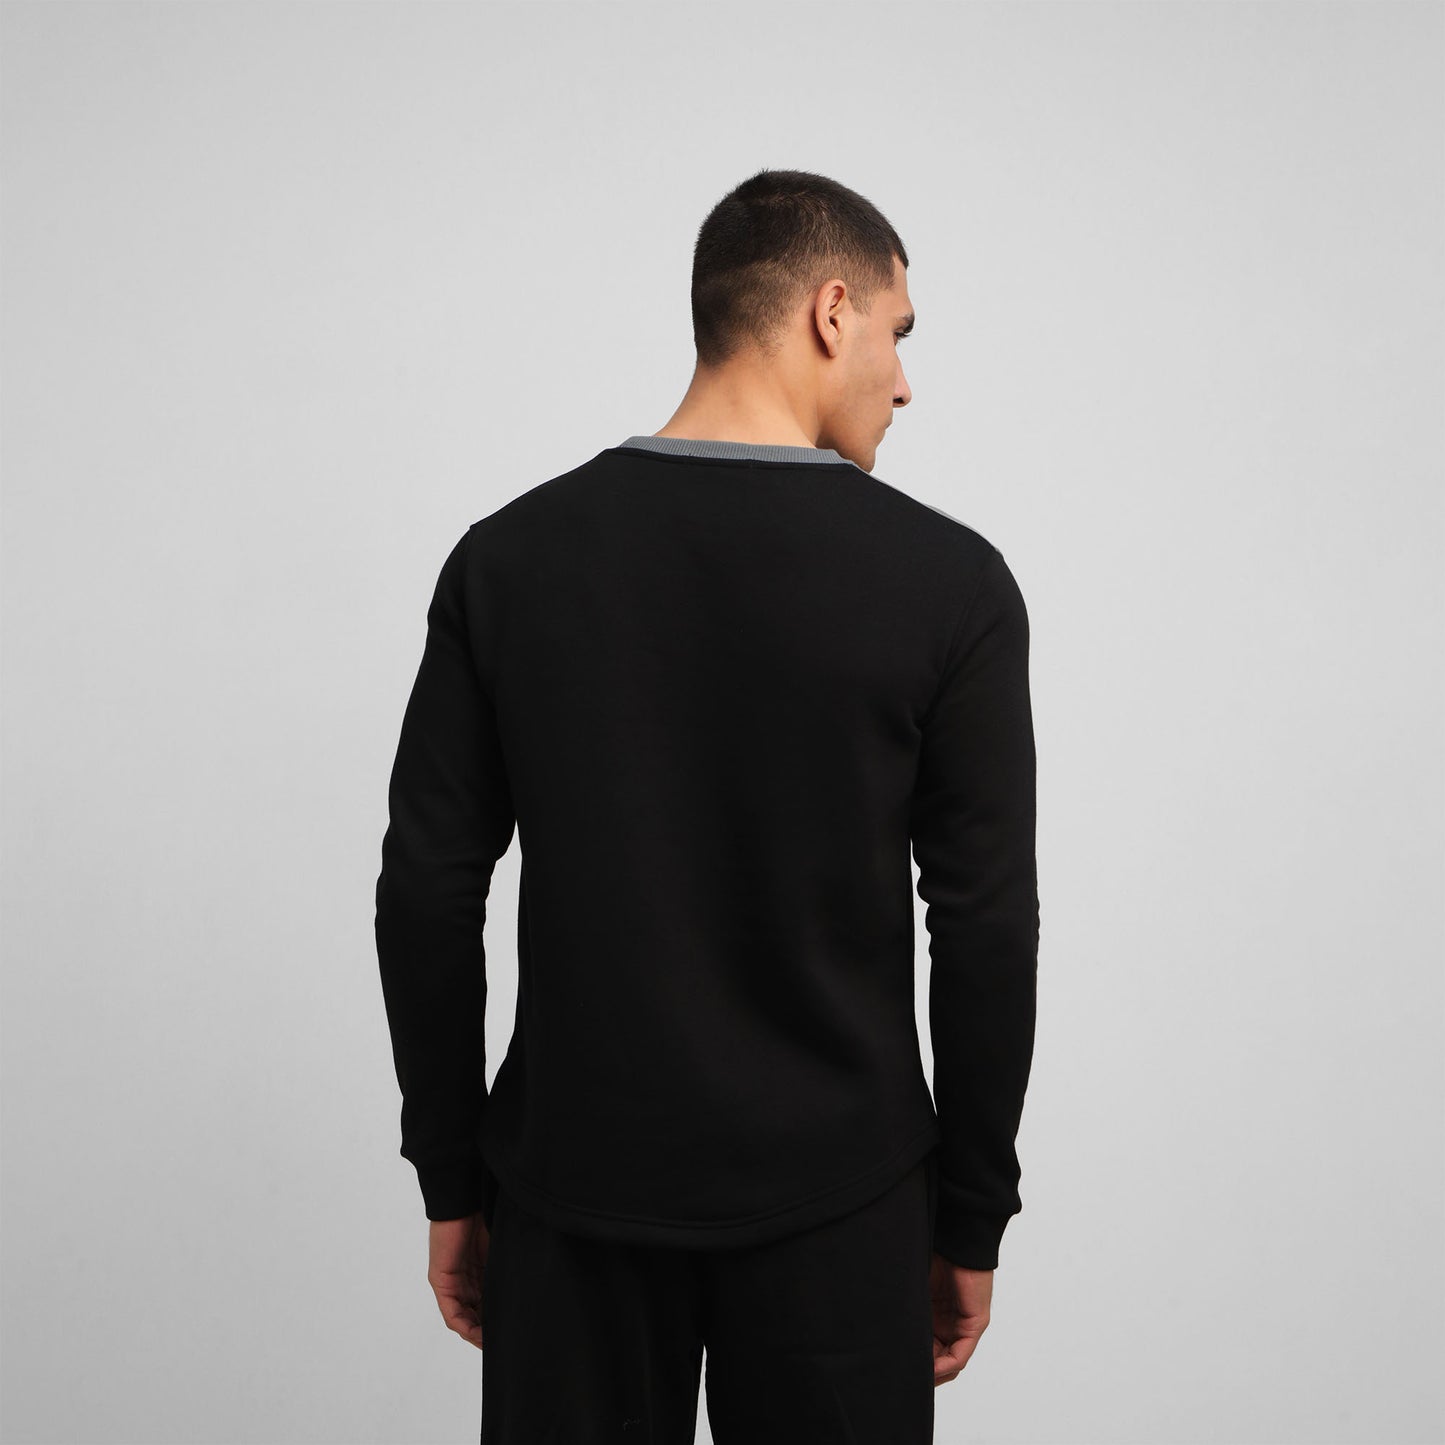 Cool Armour Sweatshirt (Black)